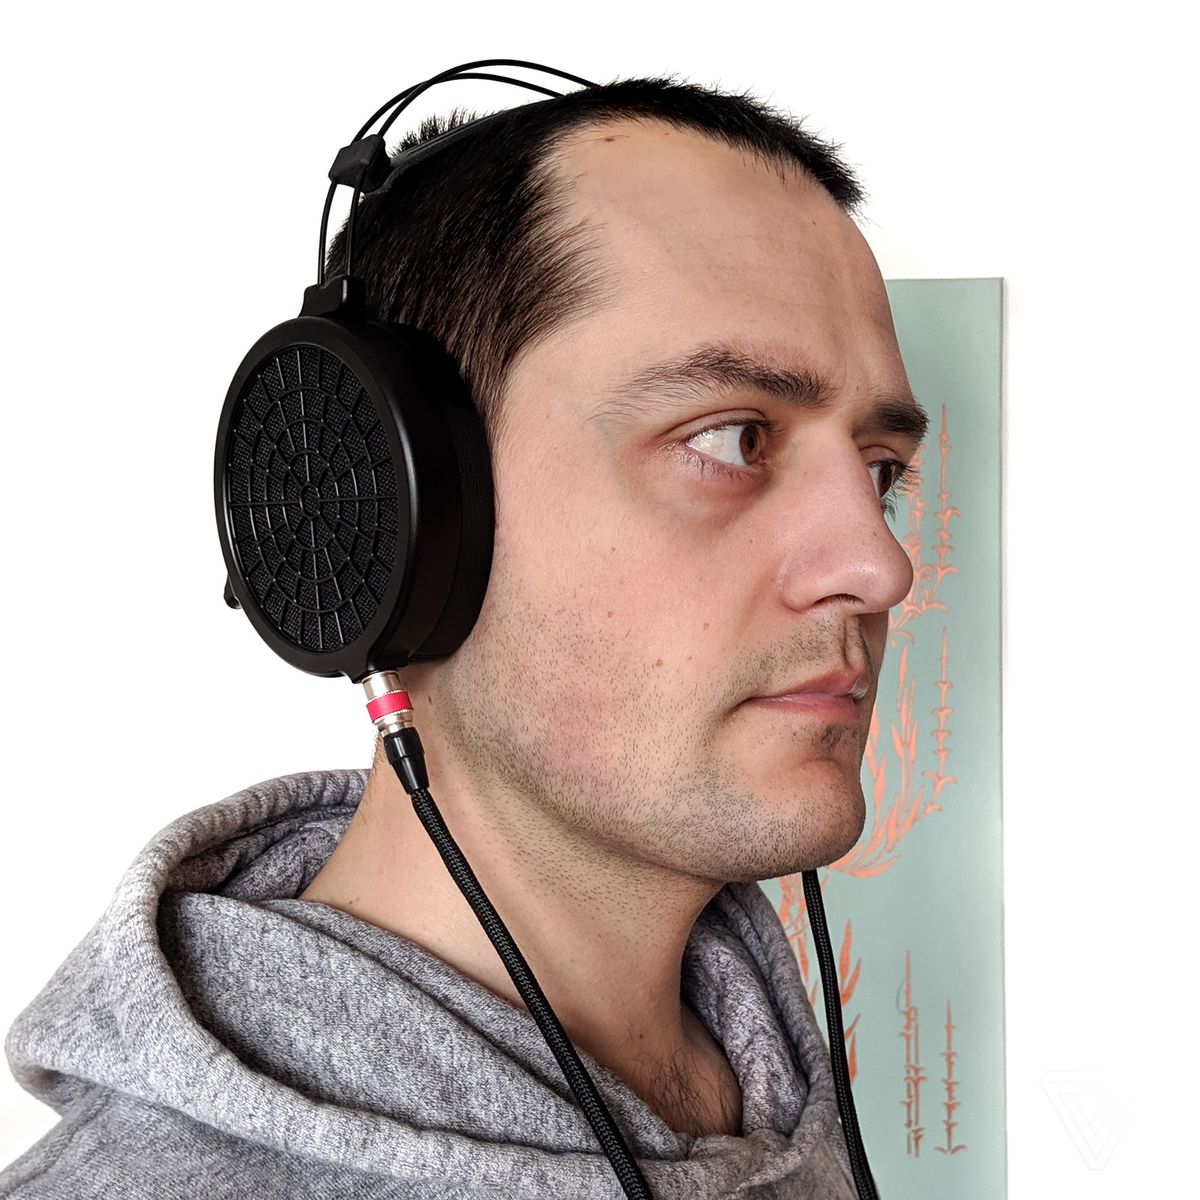 MrSpeakers Ether 2 review: true high-resolution headphones - The Verge